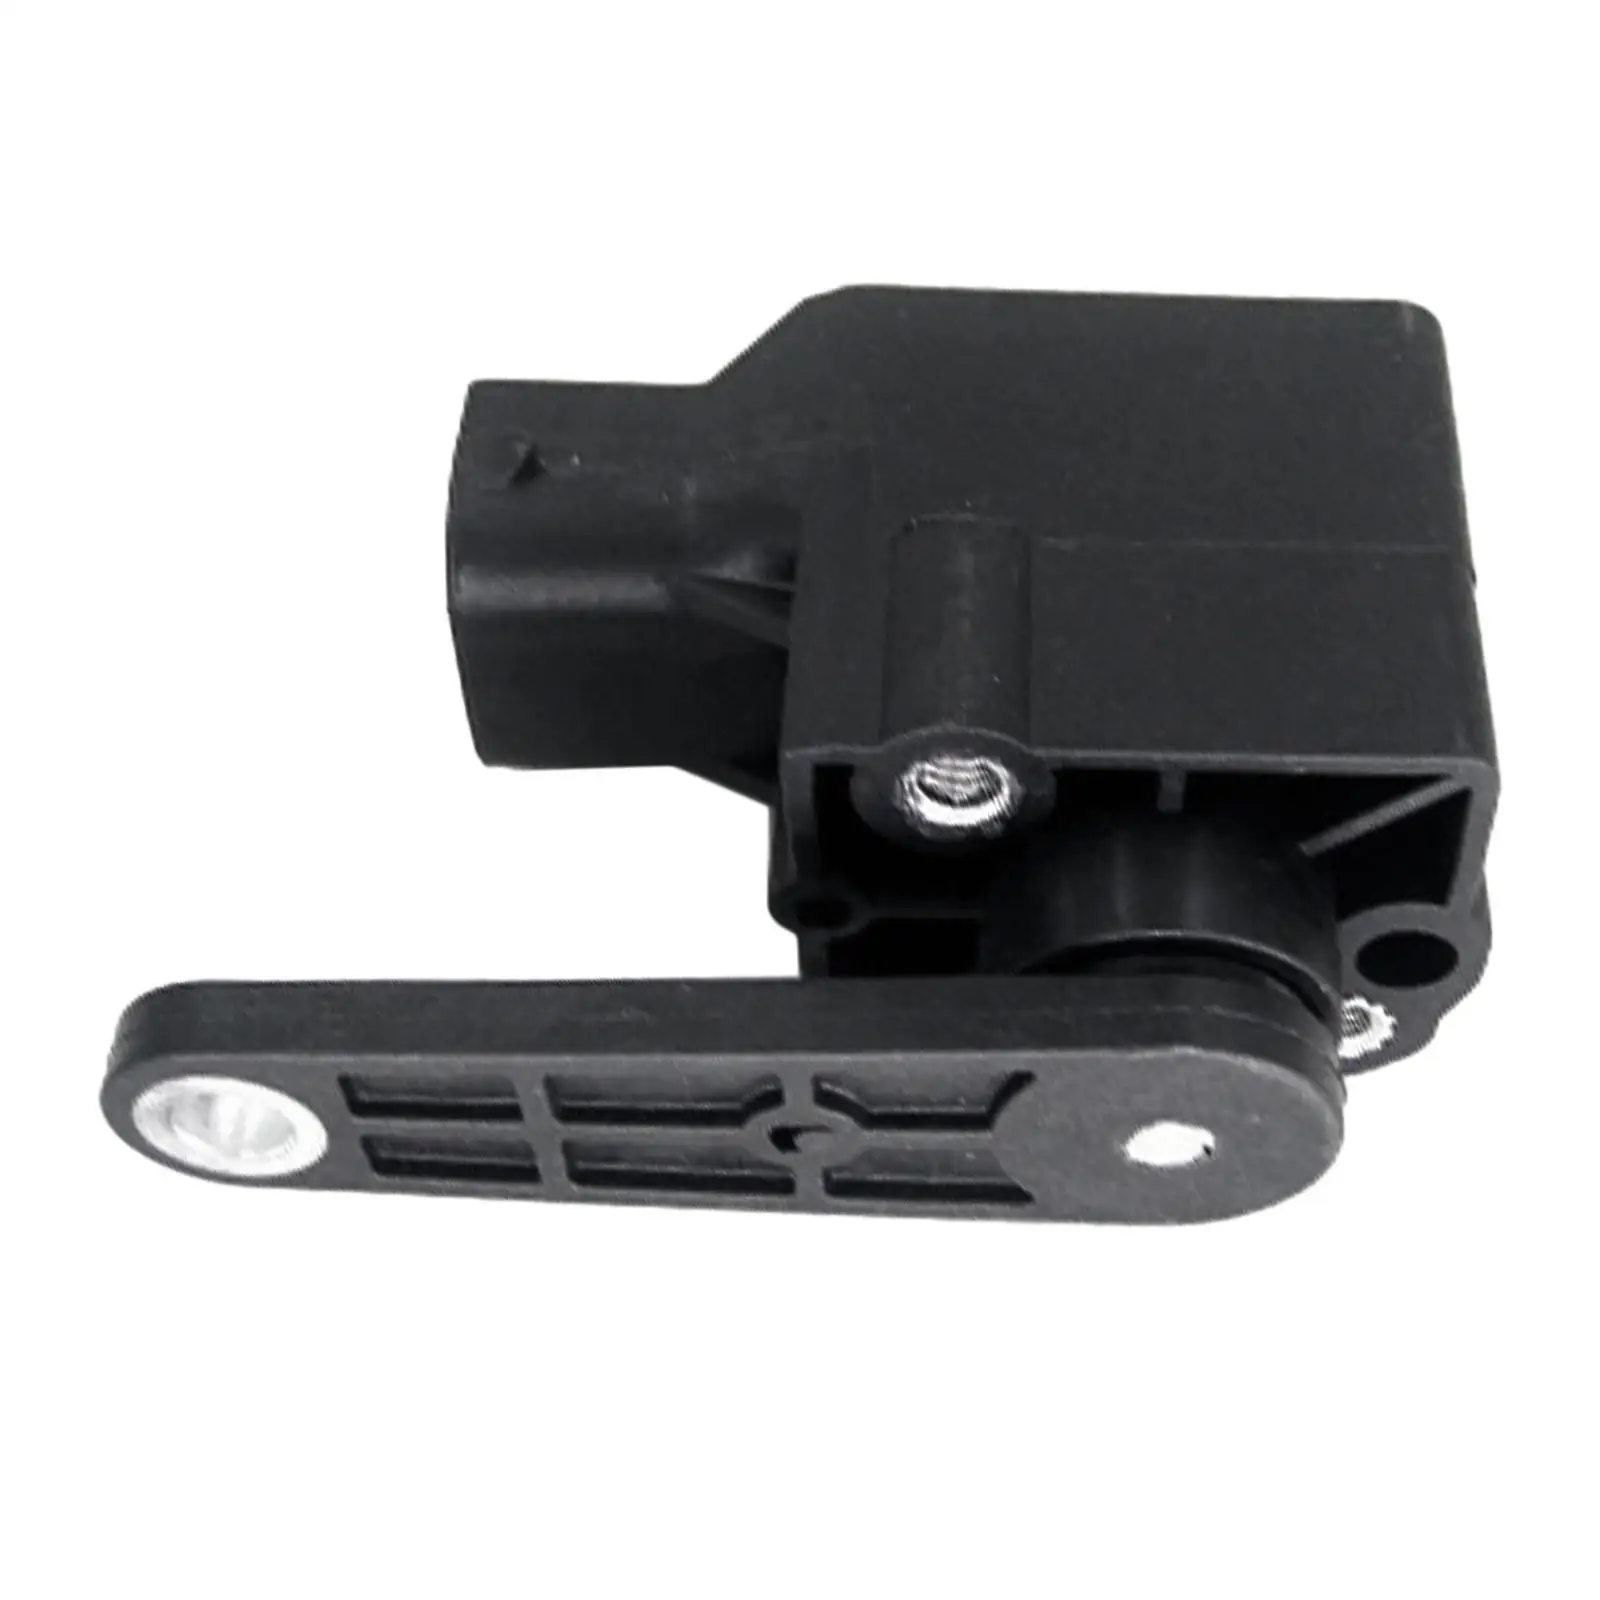 Headlight Level Sensor 6Pin Automotive Replace Parts ,Bulbs Fits for 3 M5 x5 Z4 Z8  528i  37146784696